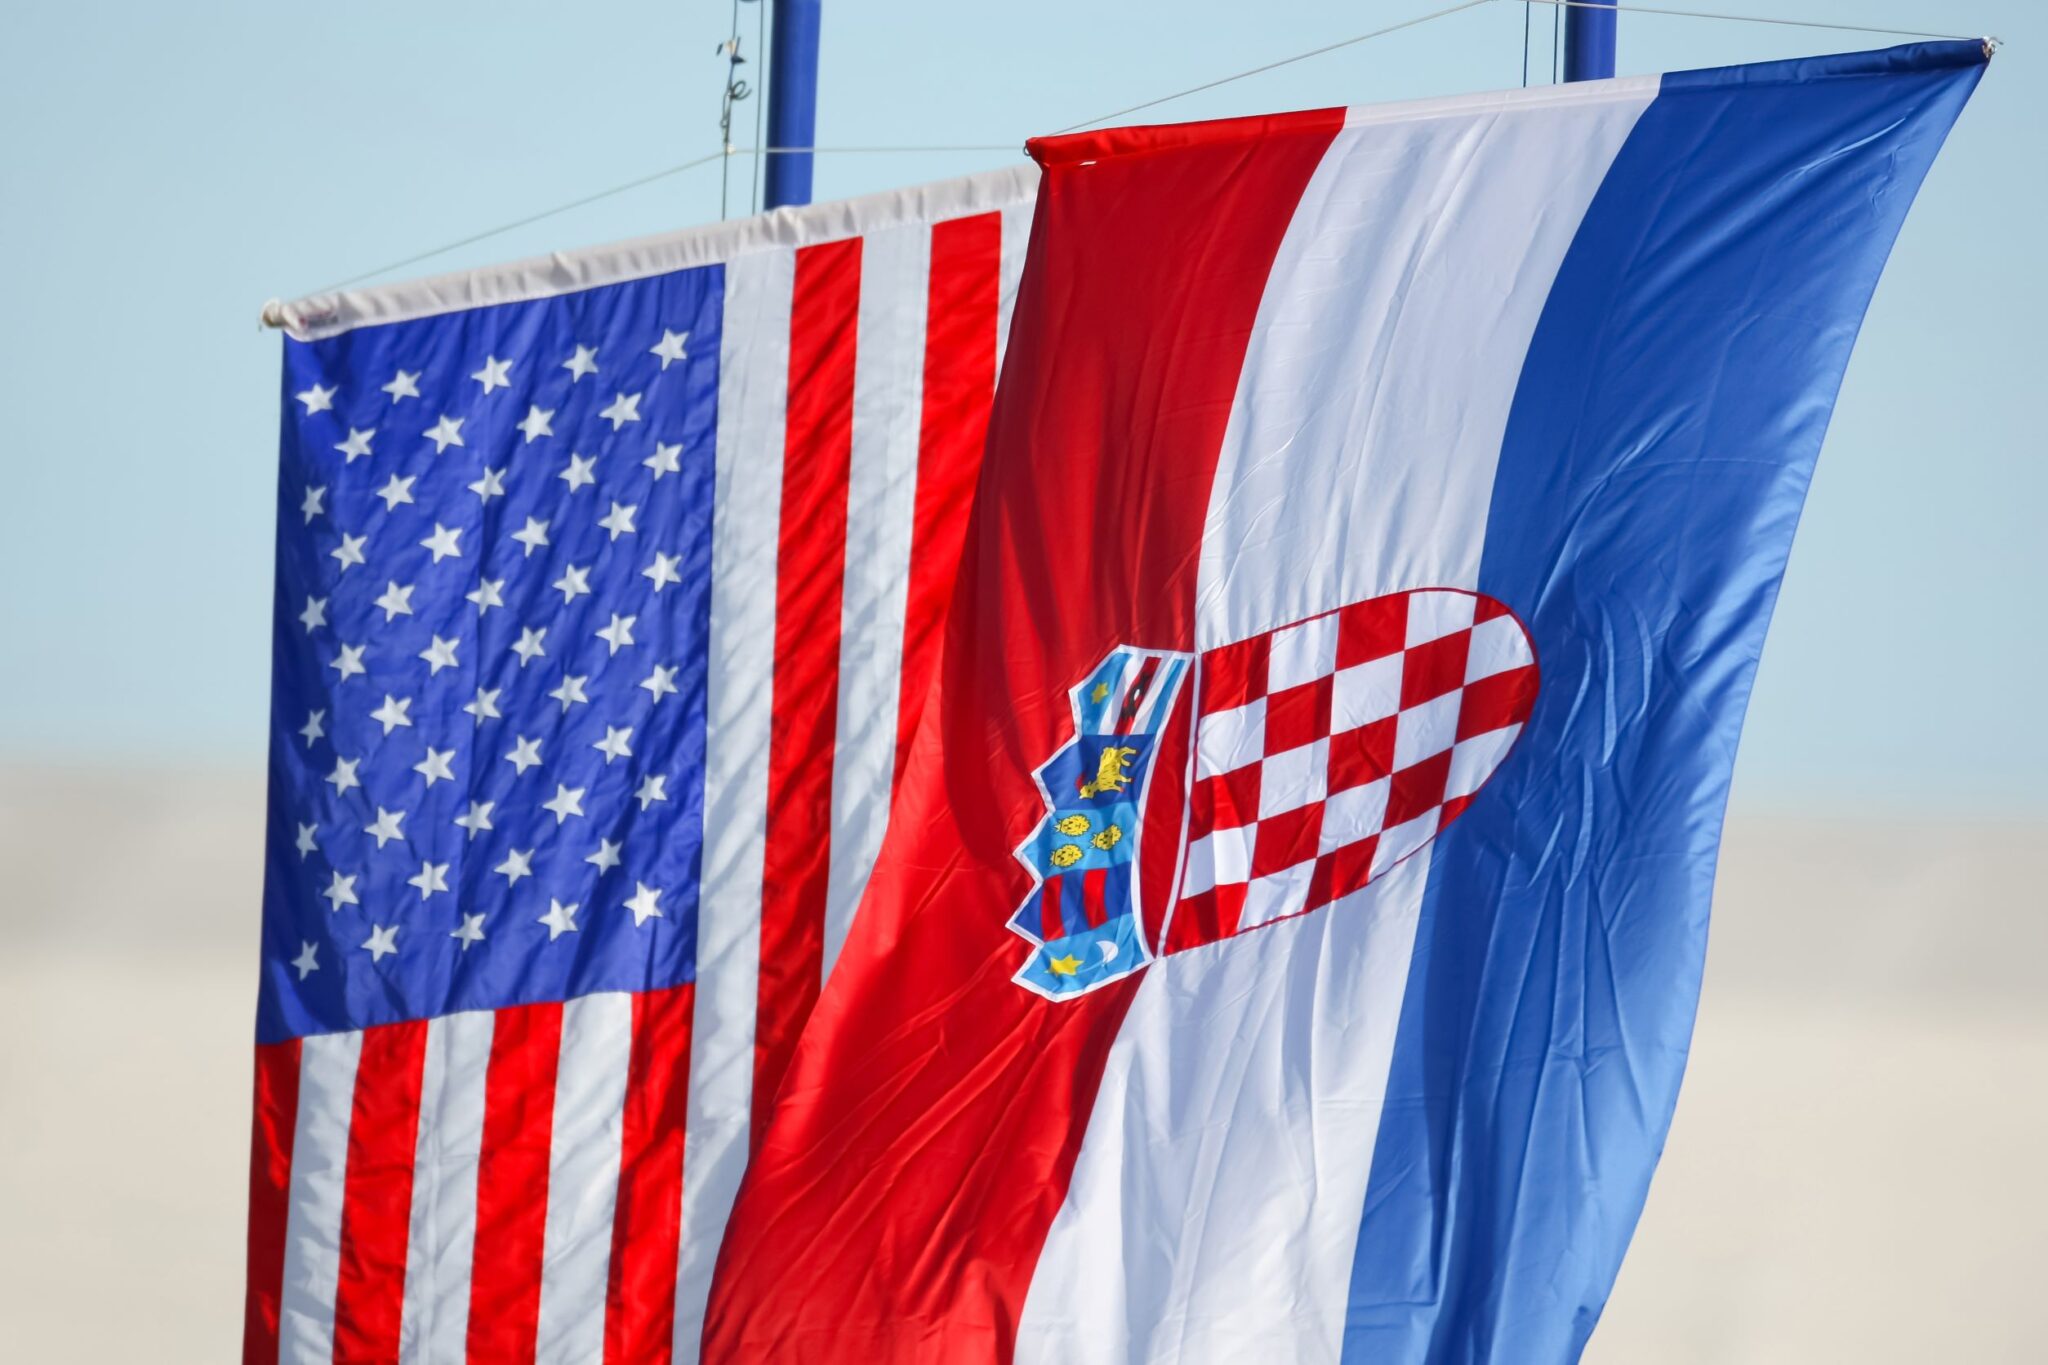 Croatian American flags